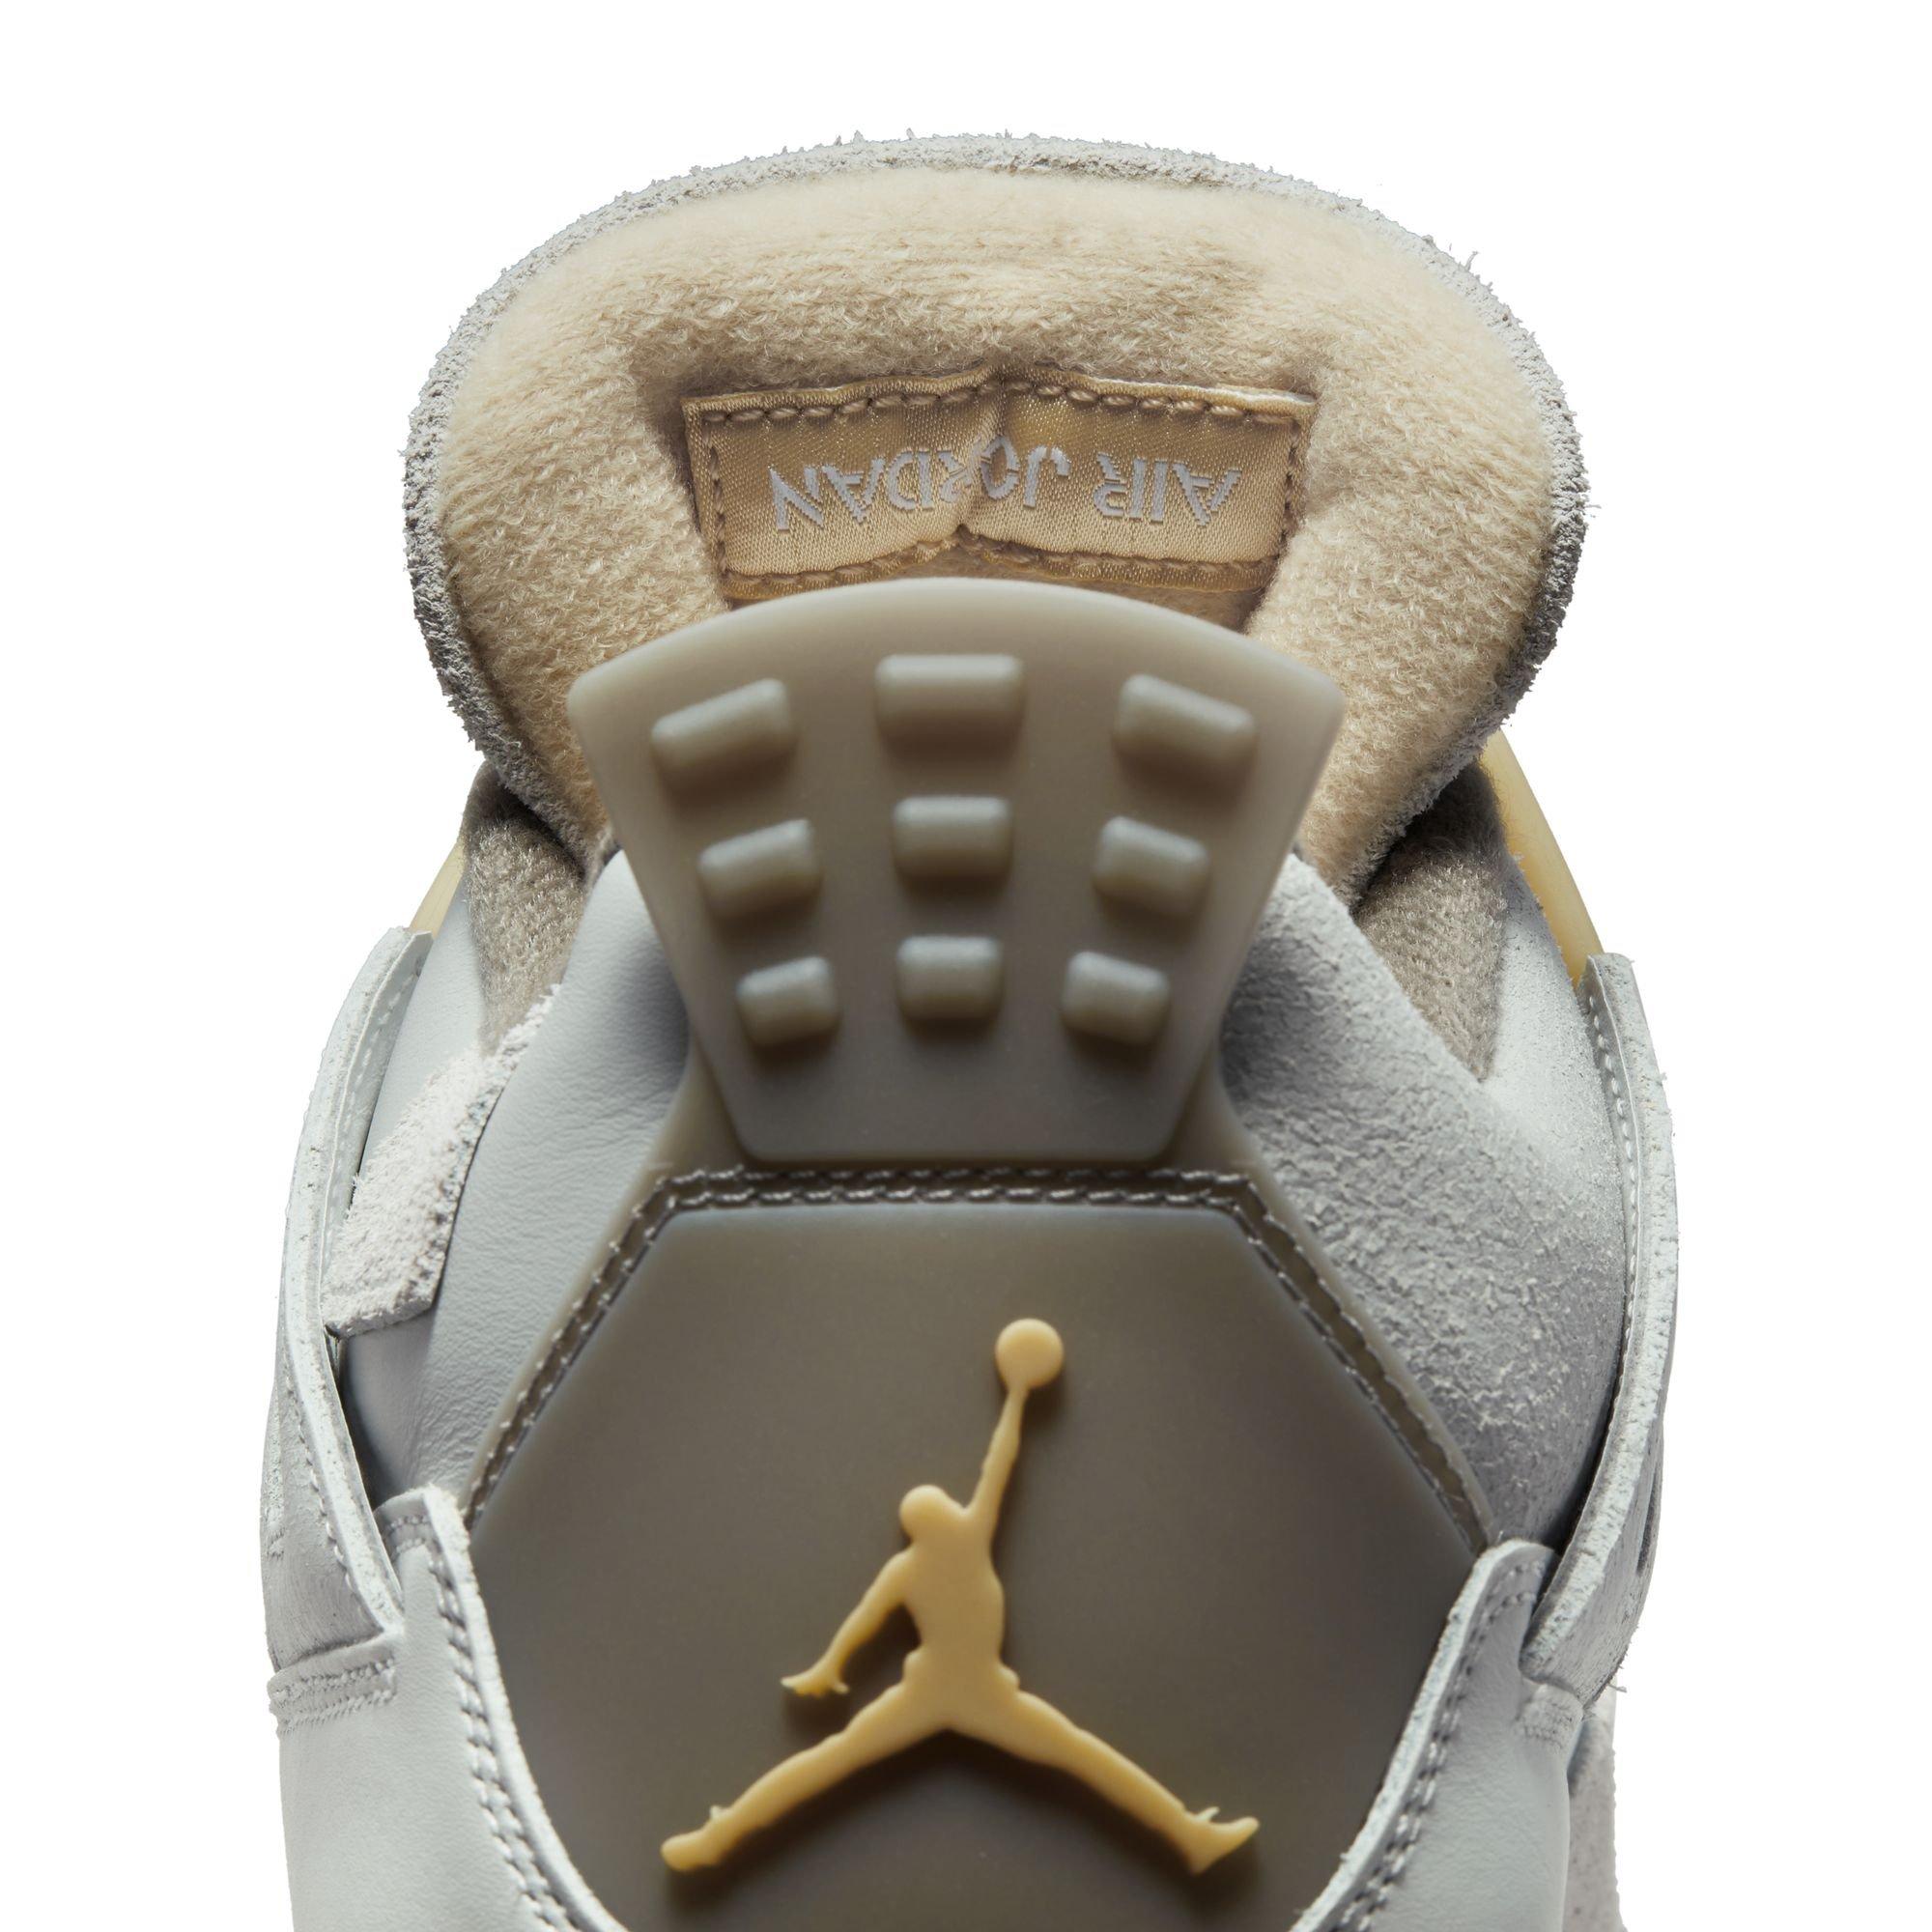 SNEAKER CONCEPTS: Air Jordan 4 x Off-White “Artic” 🥶❄️